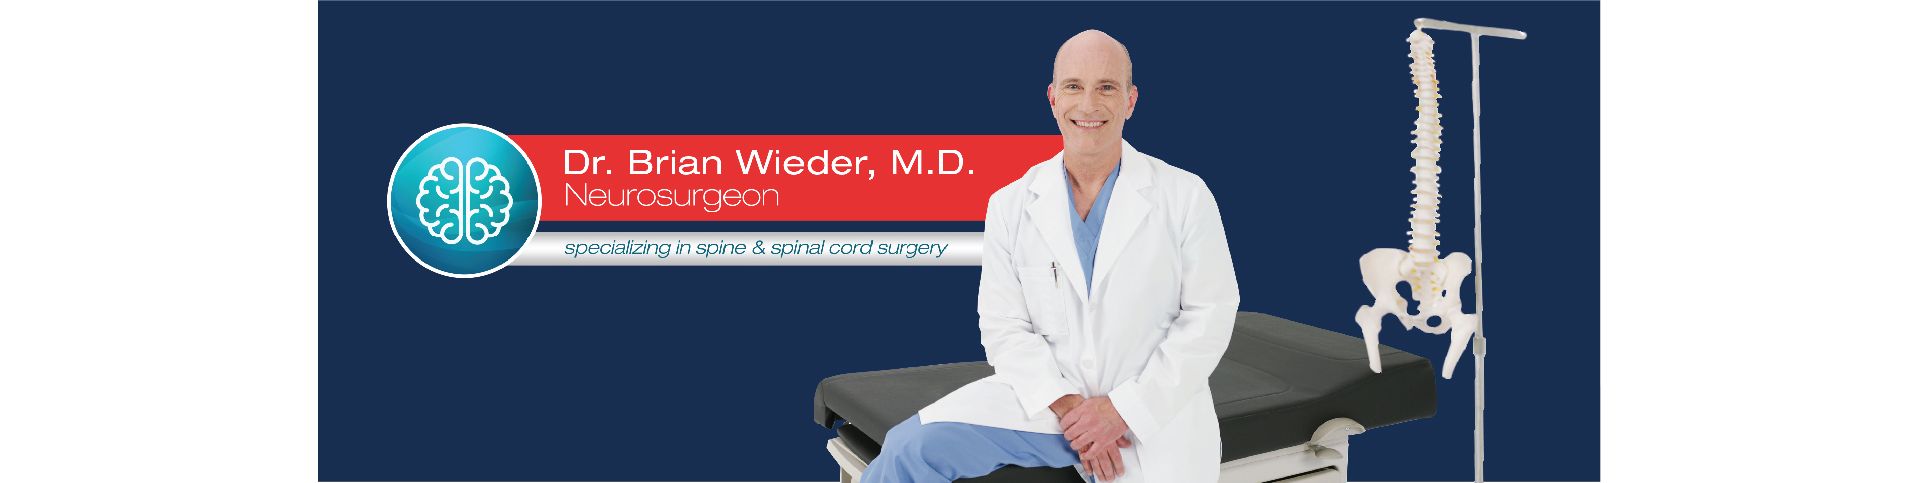 Dr. Brian Wieder, M.D.